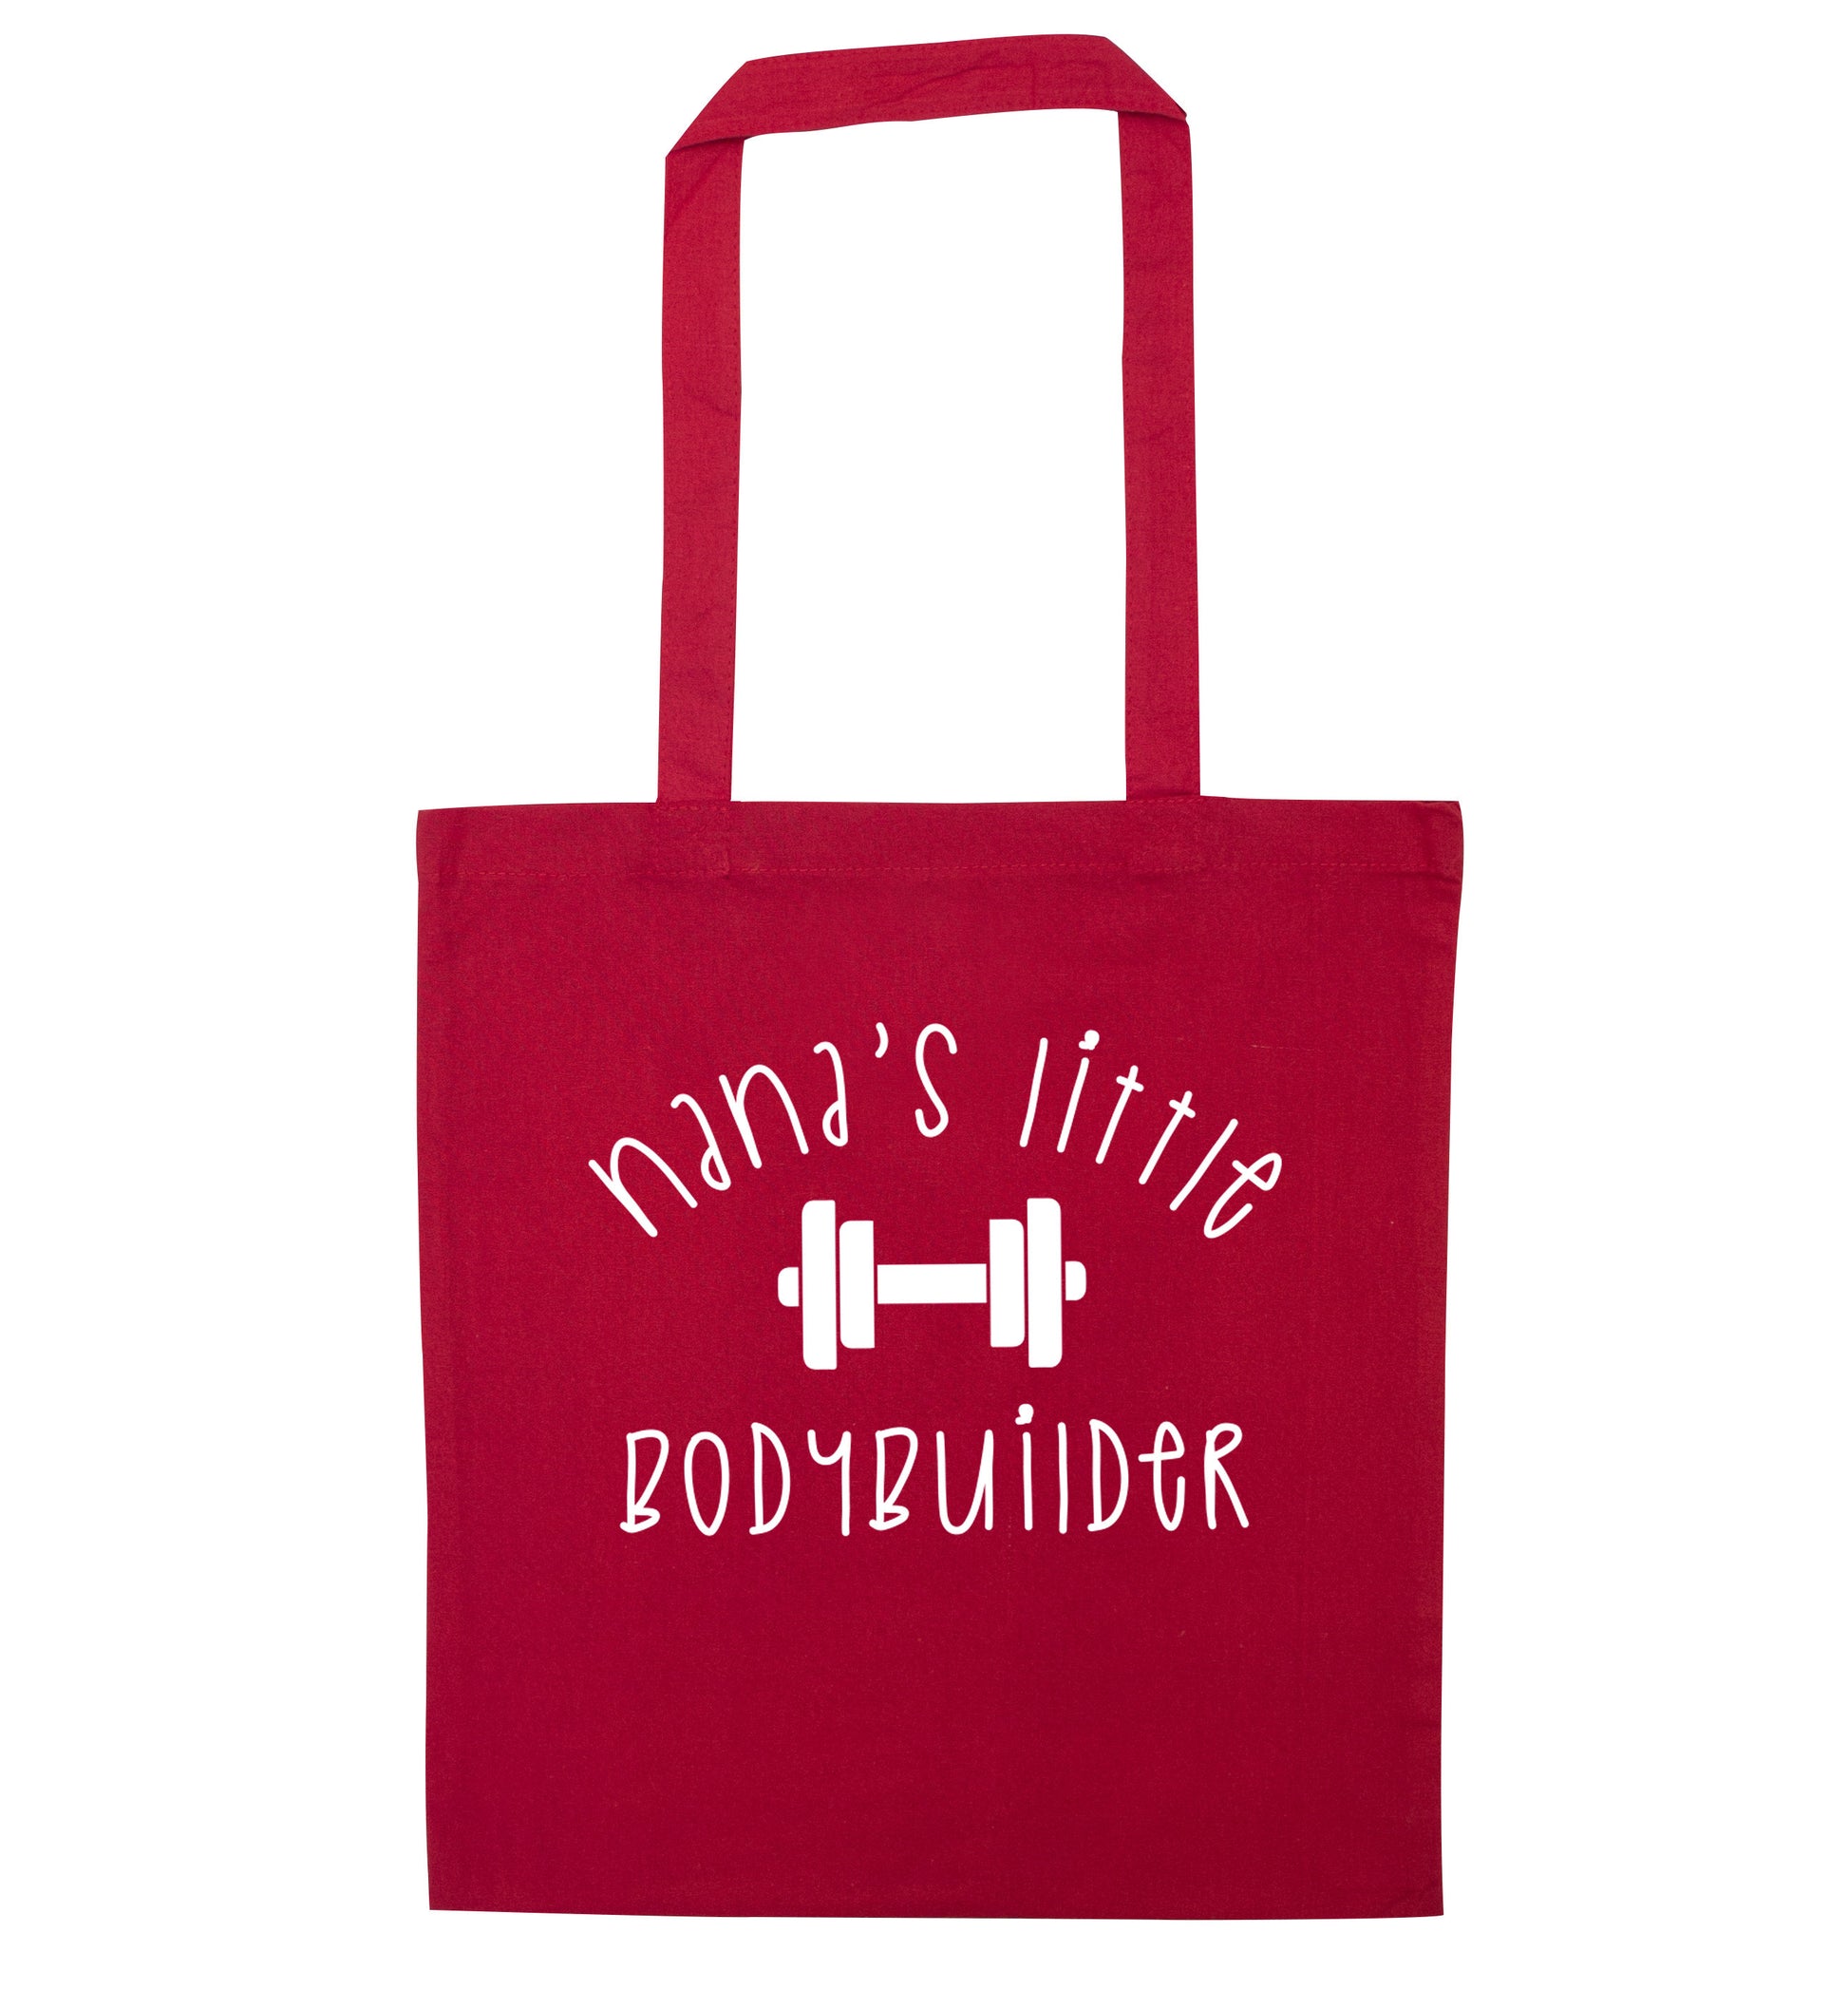 Nana's little bodybuilder red tote bag